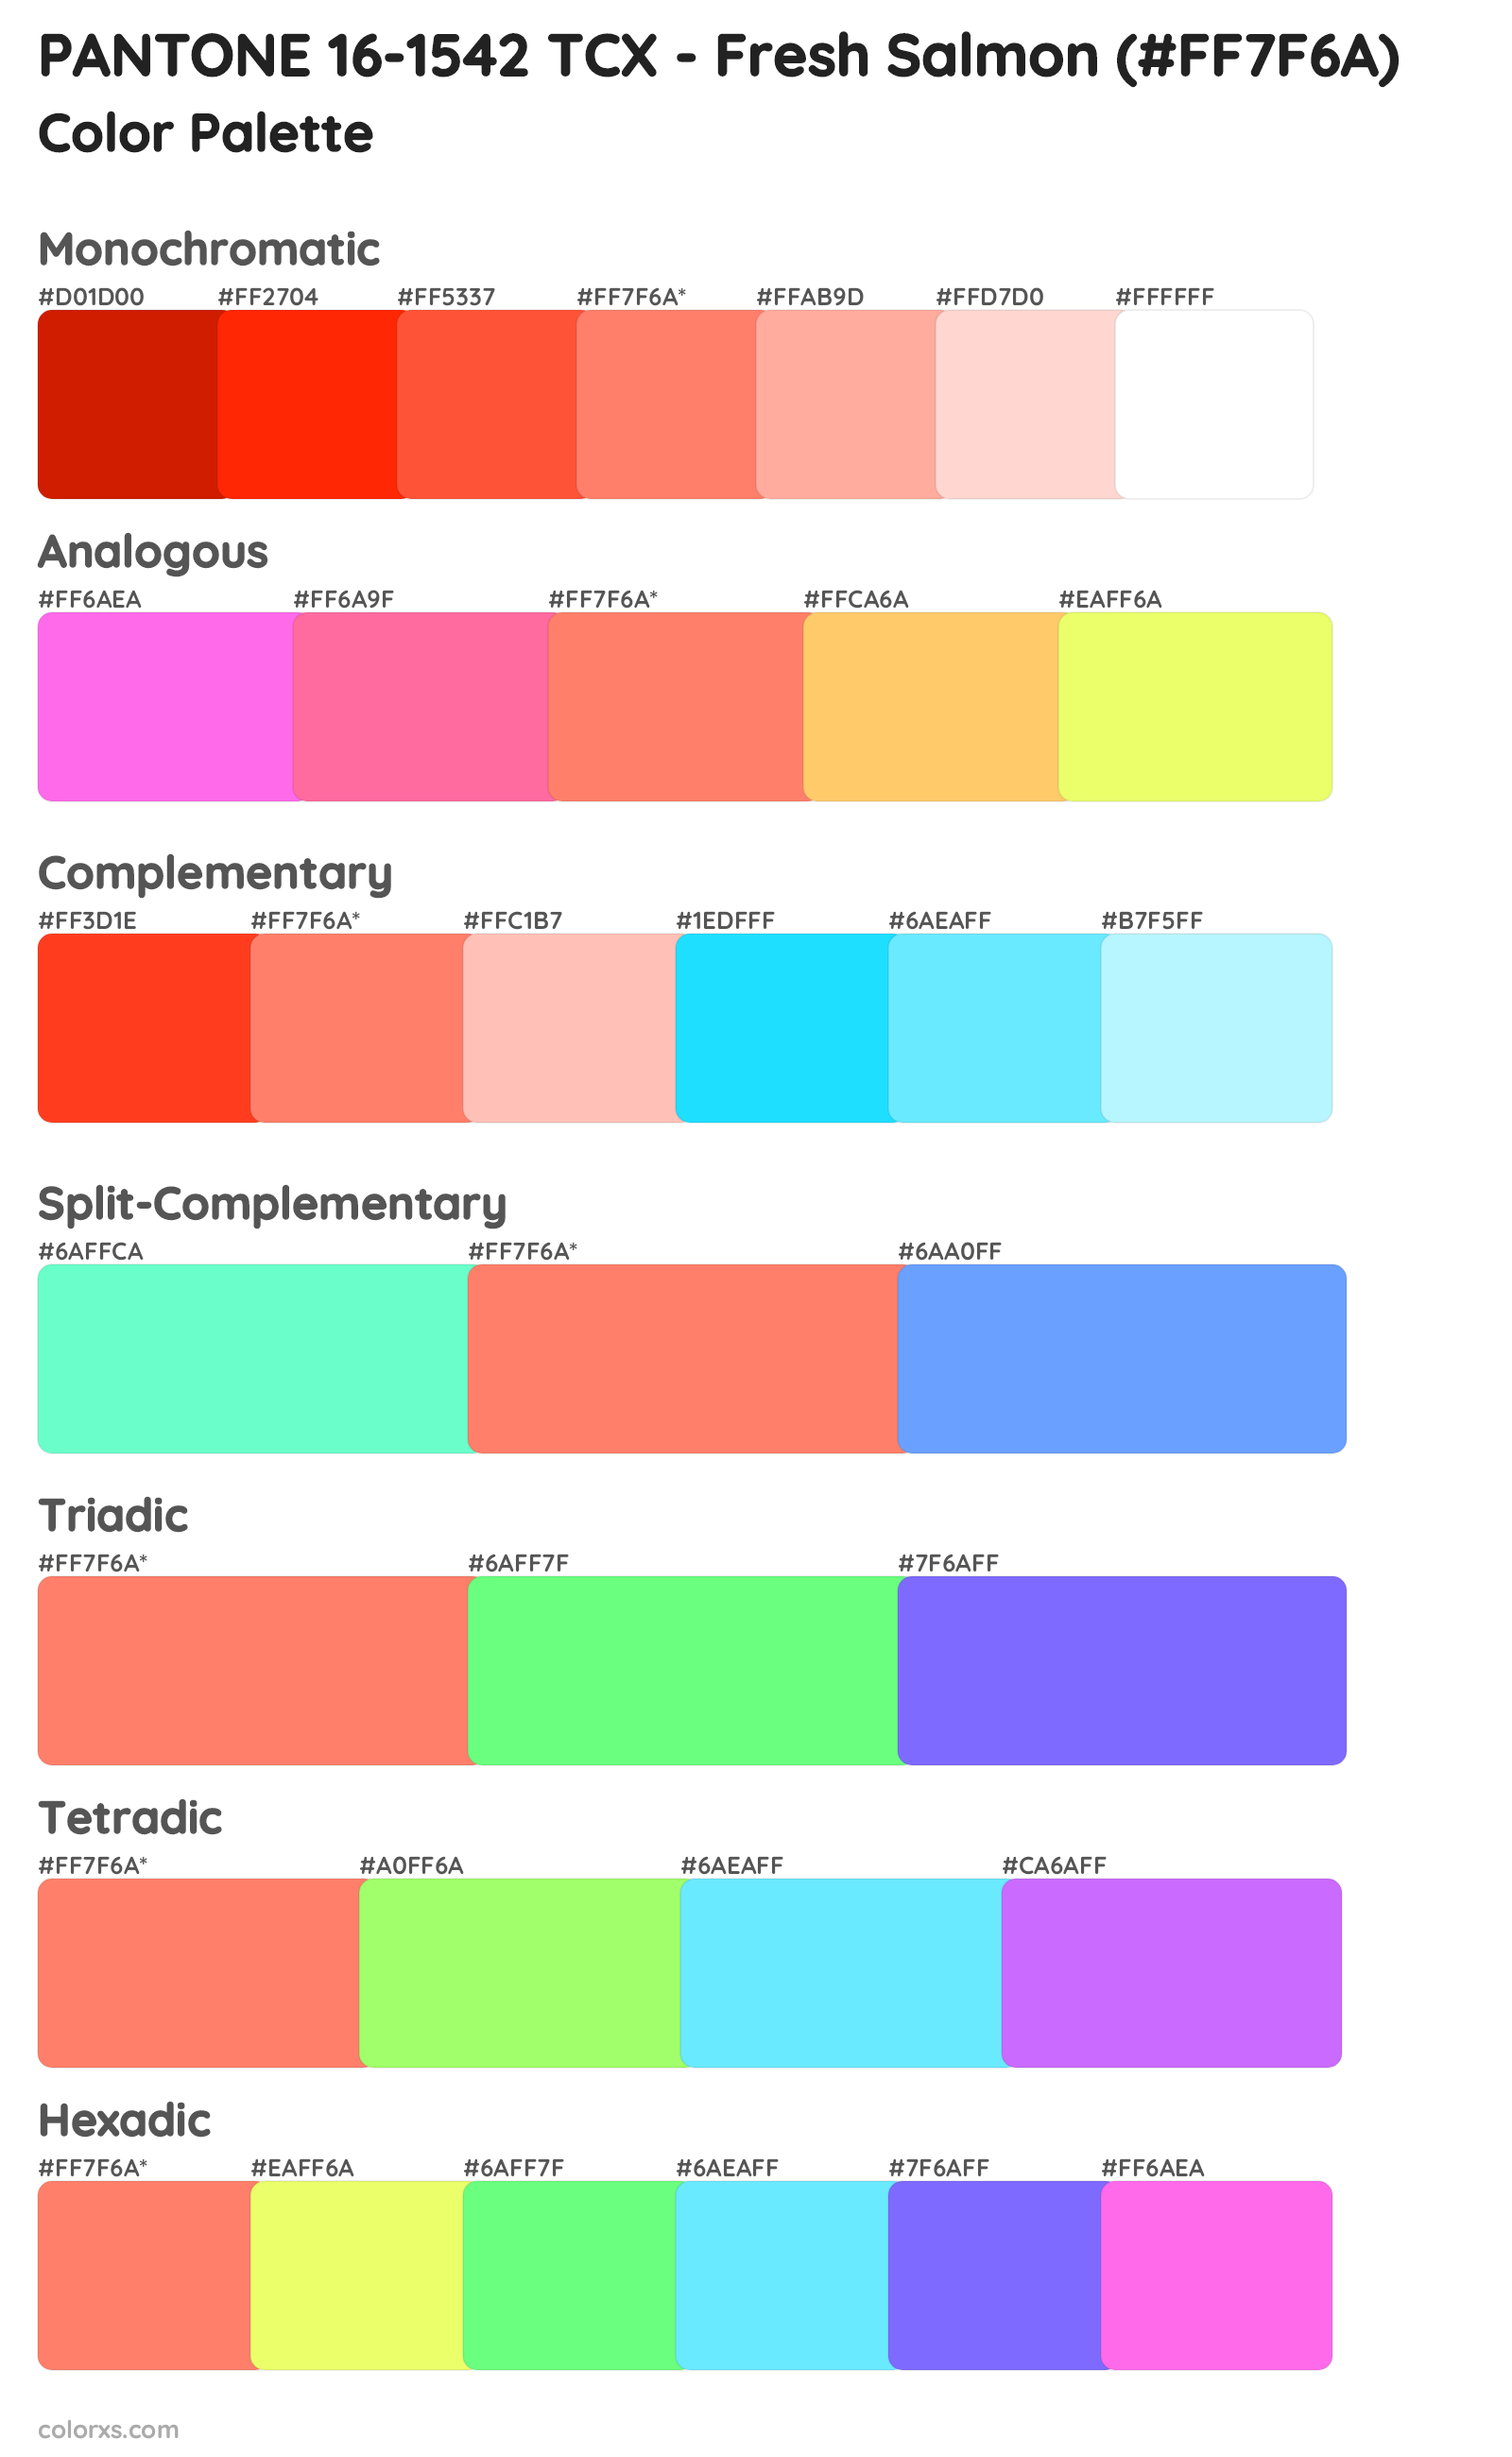 PANTONE 16-1542 TCX - Fresh Salmon Color Scheme Palettes